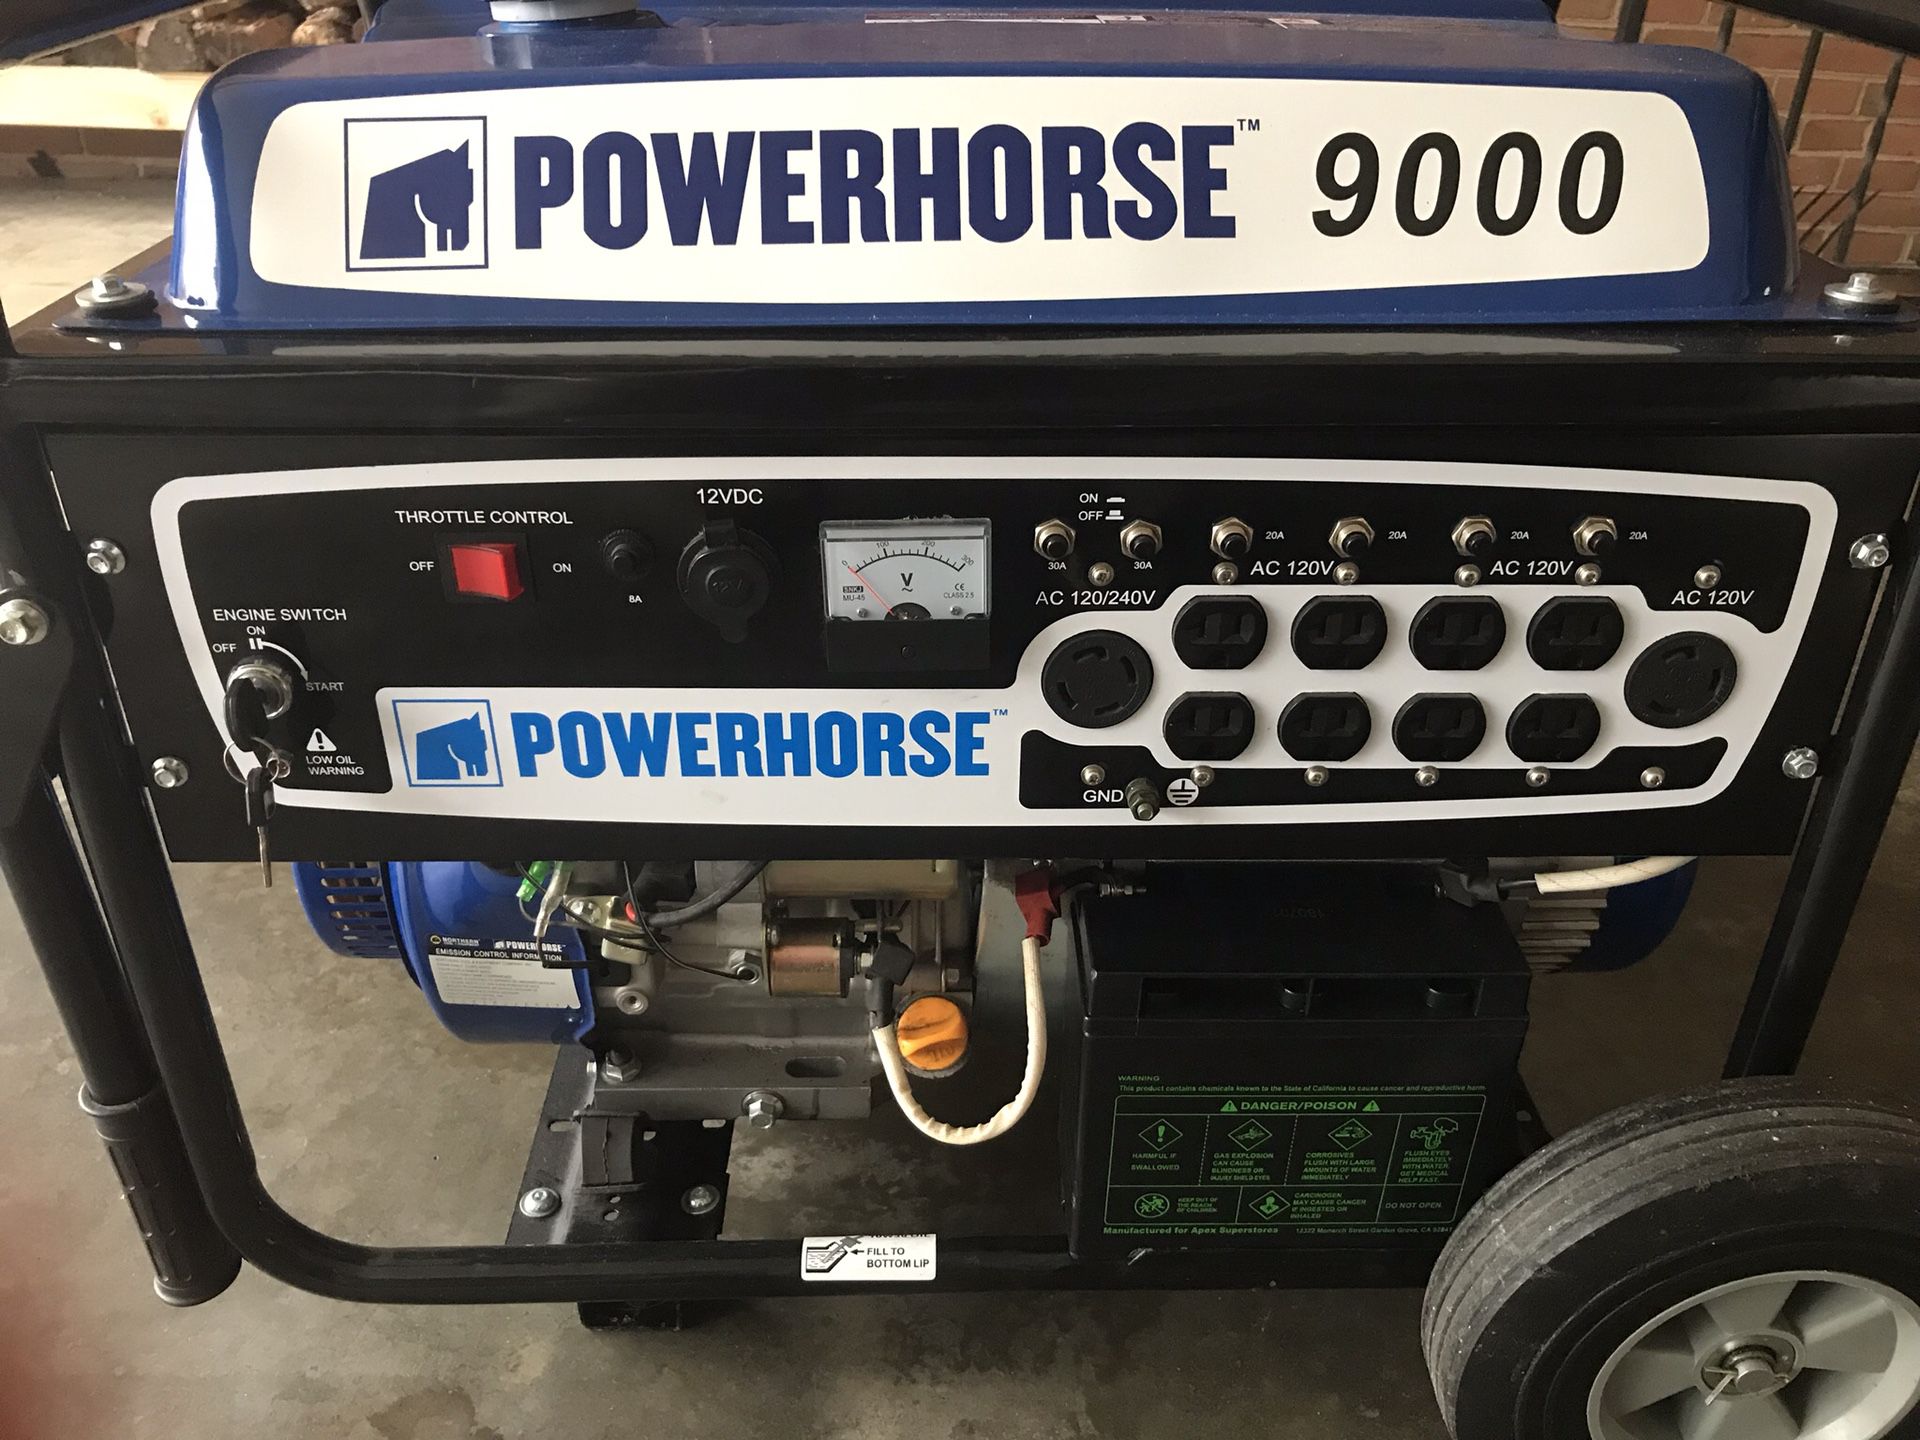 Powerhouse 9000 generator